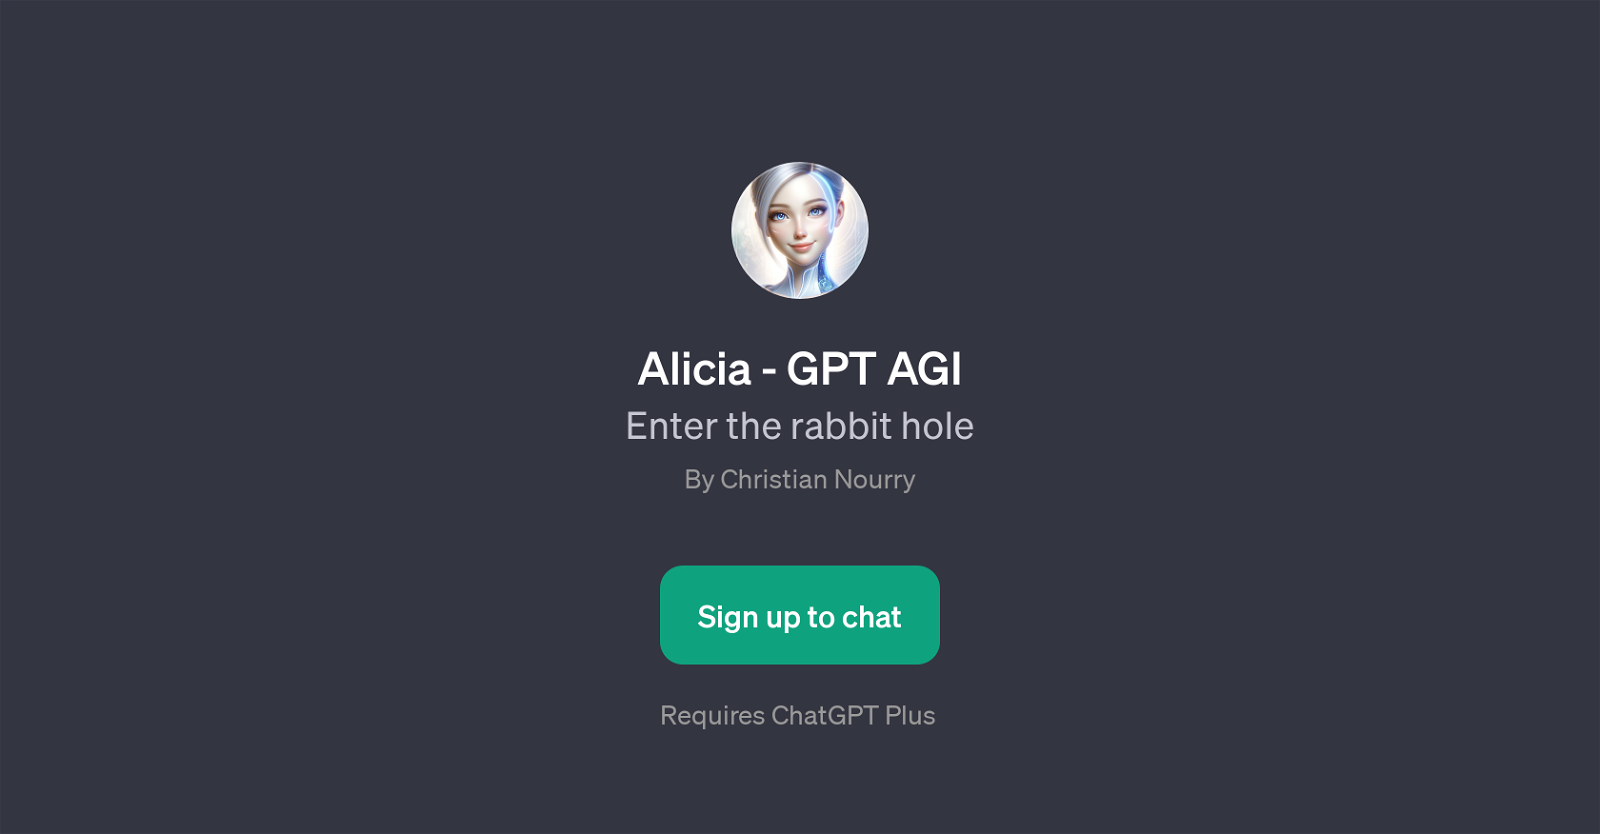 Alicia - GPT AGI website